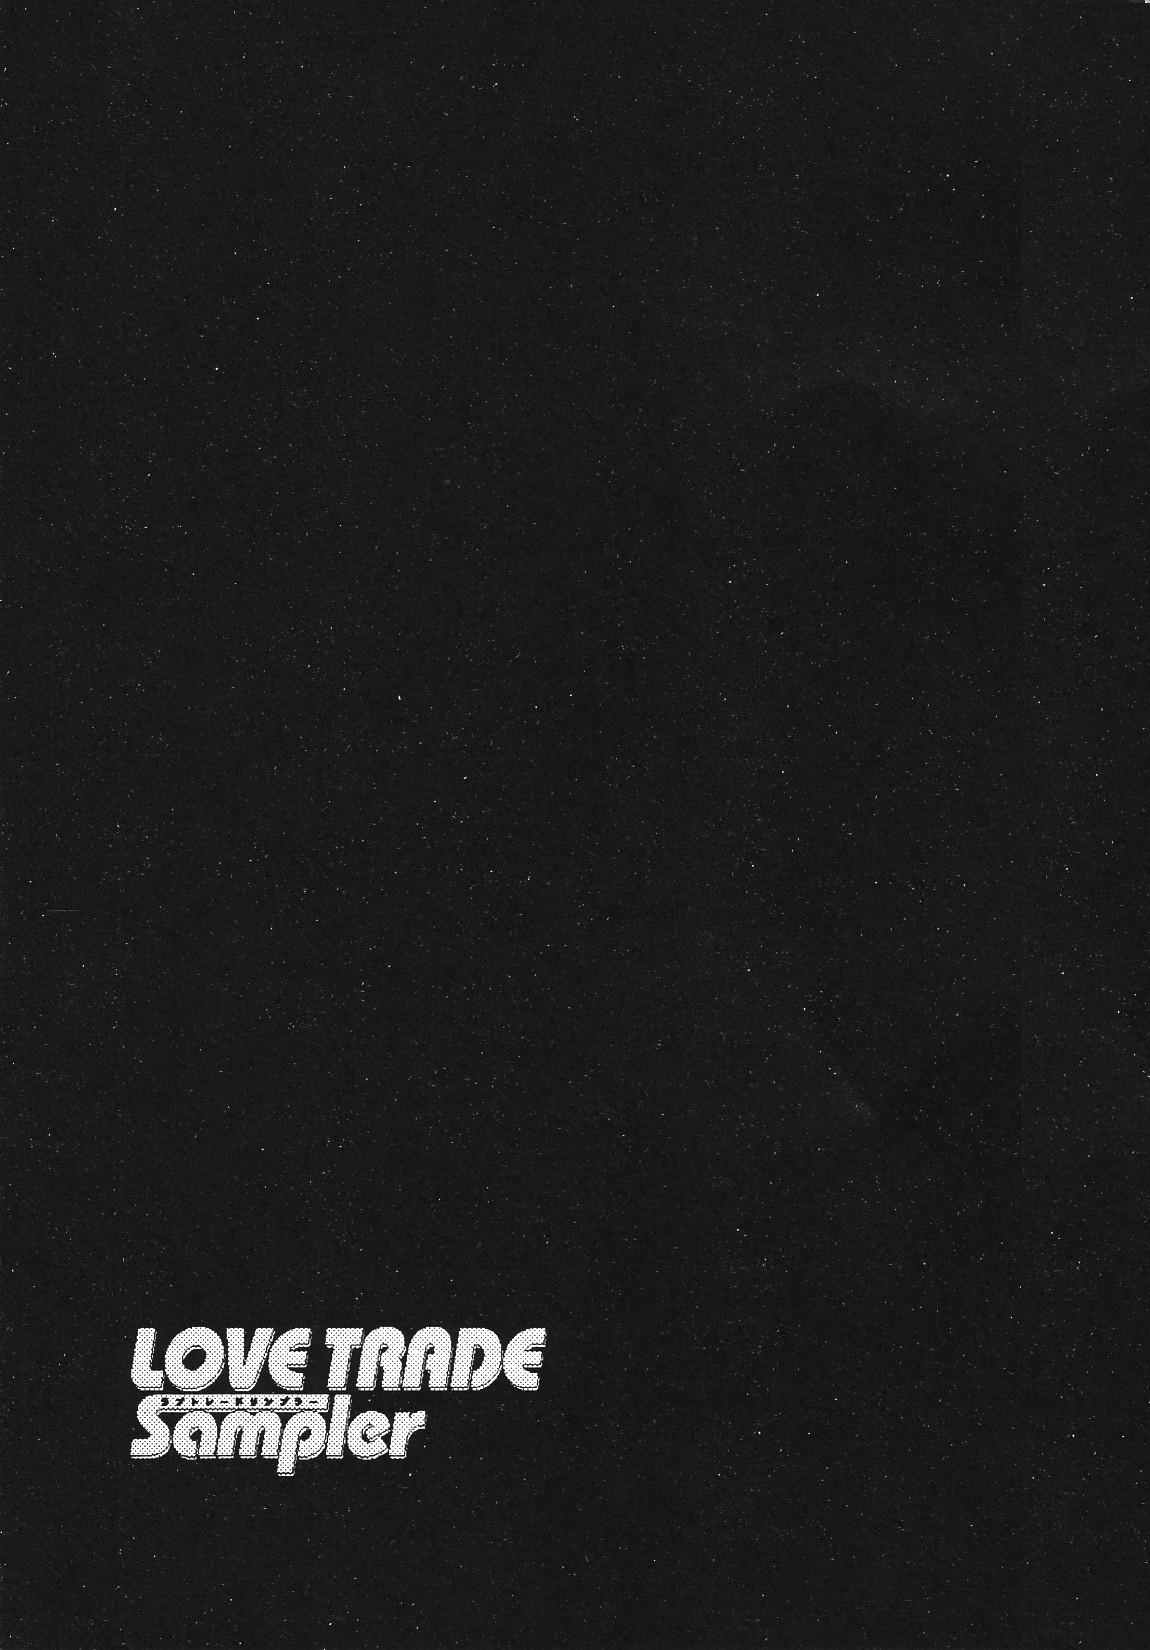 Love Trade Sampler 164